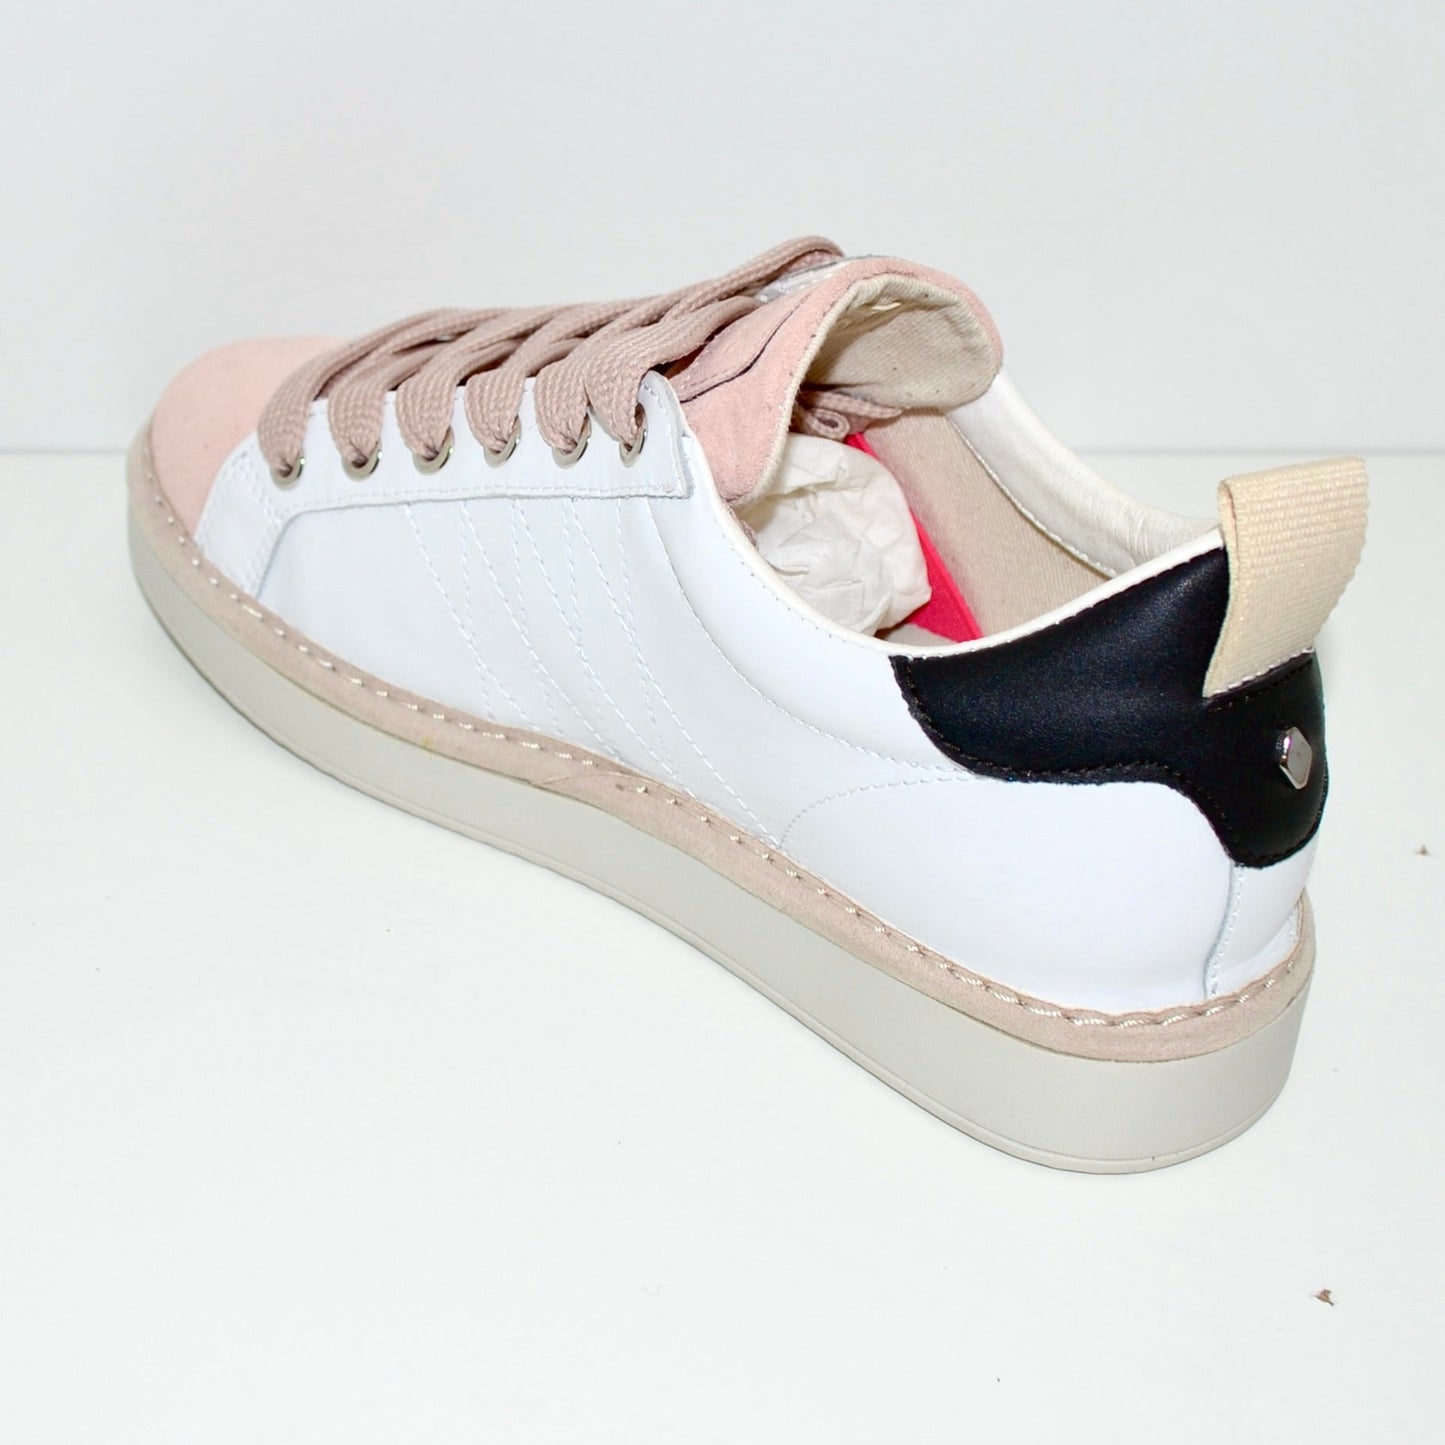 Sneakers Panchic donna pelle bianco e camoscio rosa